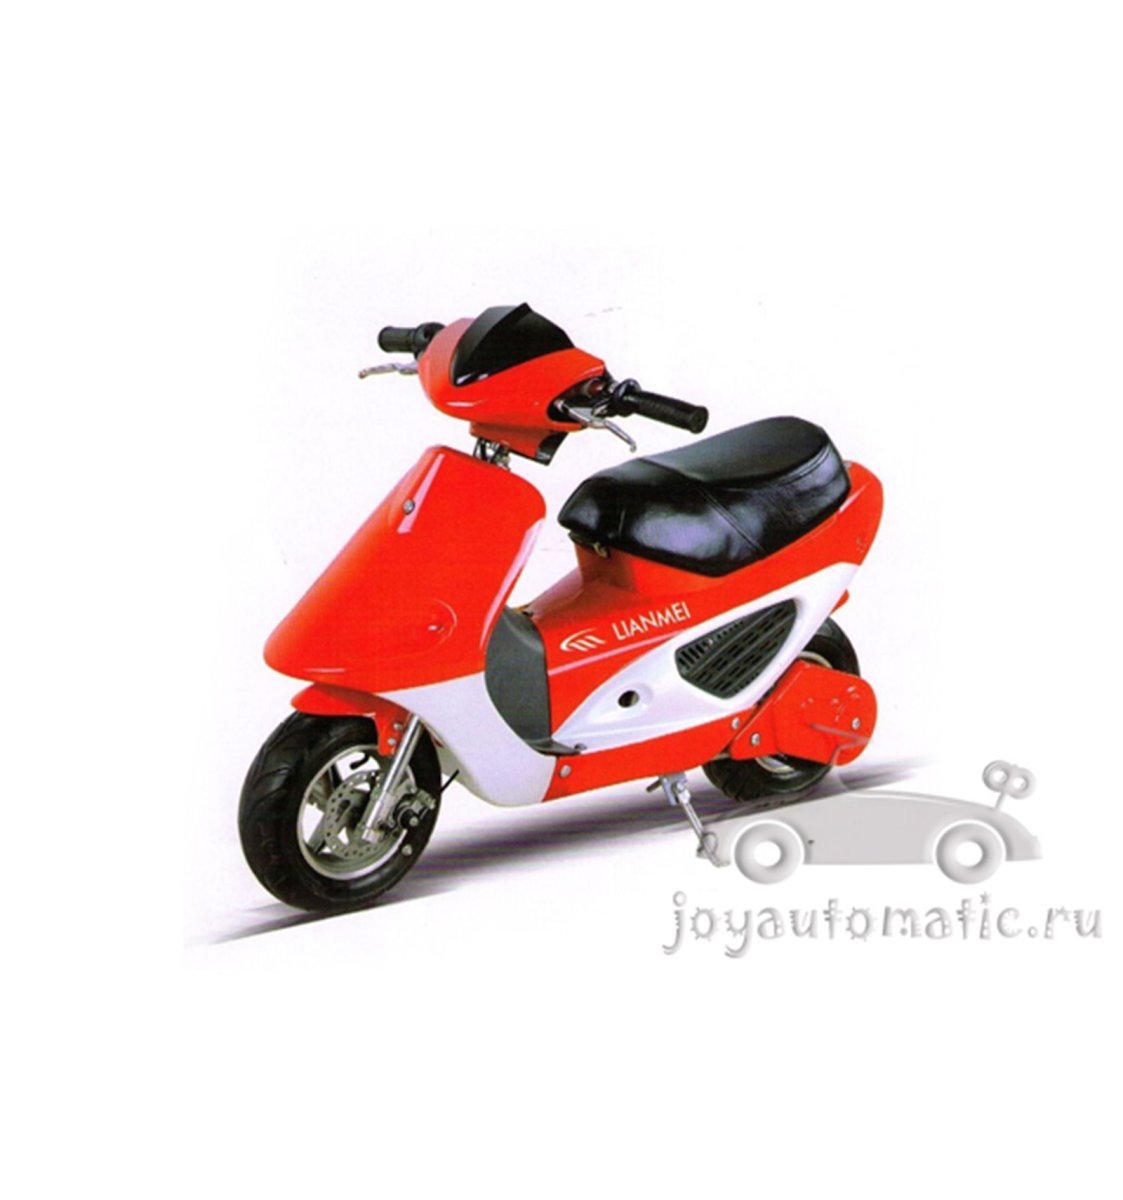 Joy Automatic мотоцикл LMOOX-r3-Bike